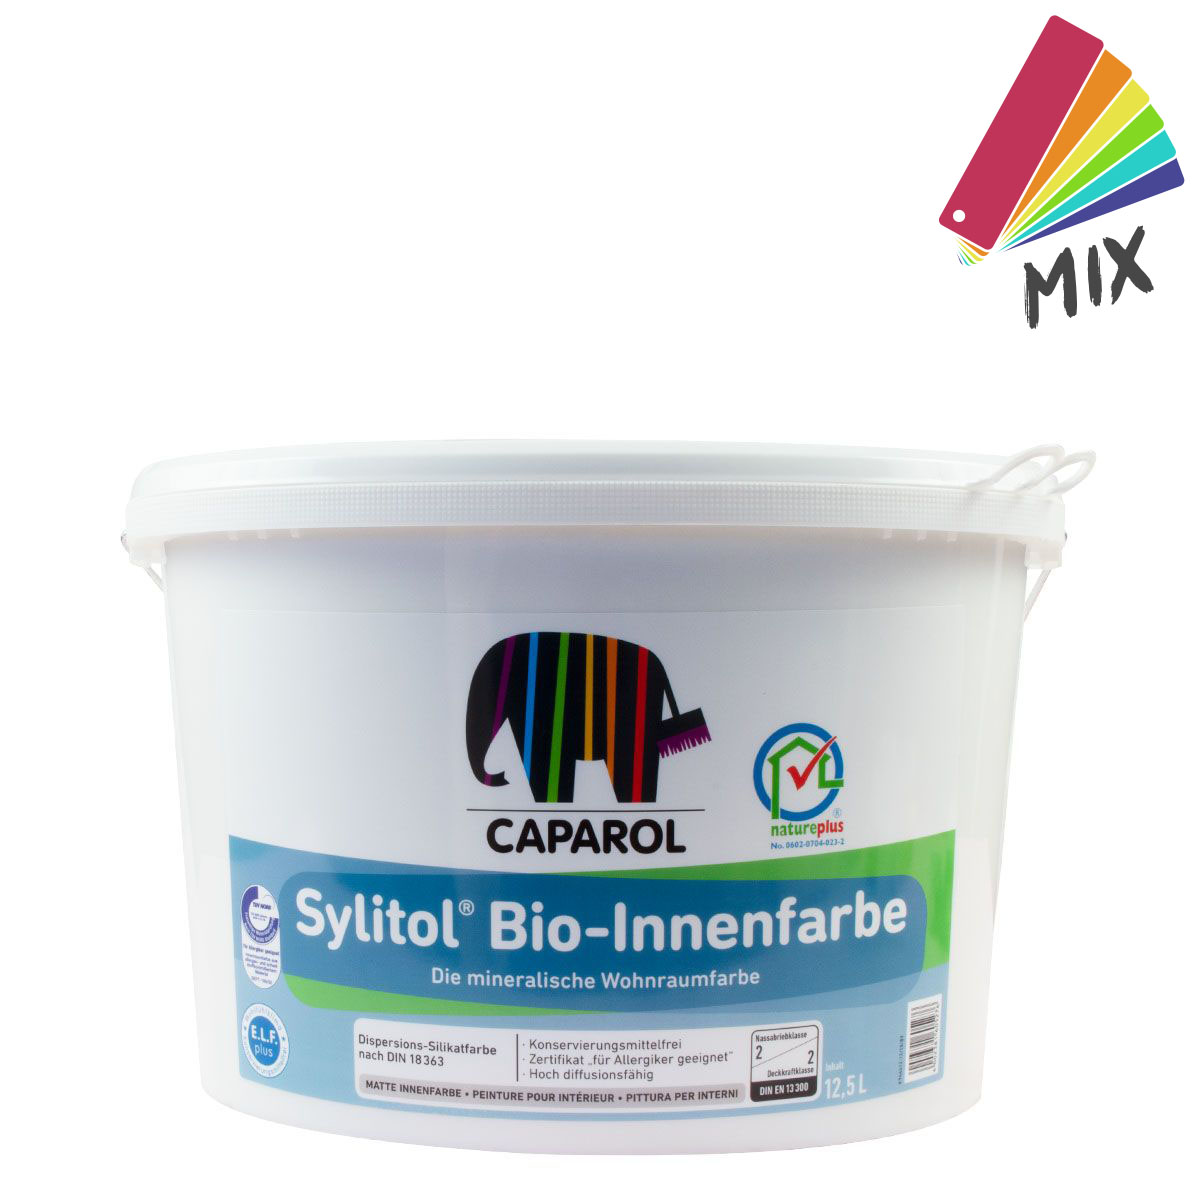 Caparol Sylitol Bio Innenfarbe 12,5L MIX PG S Allergiker geeignet